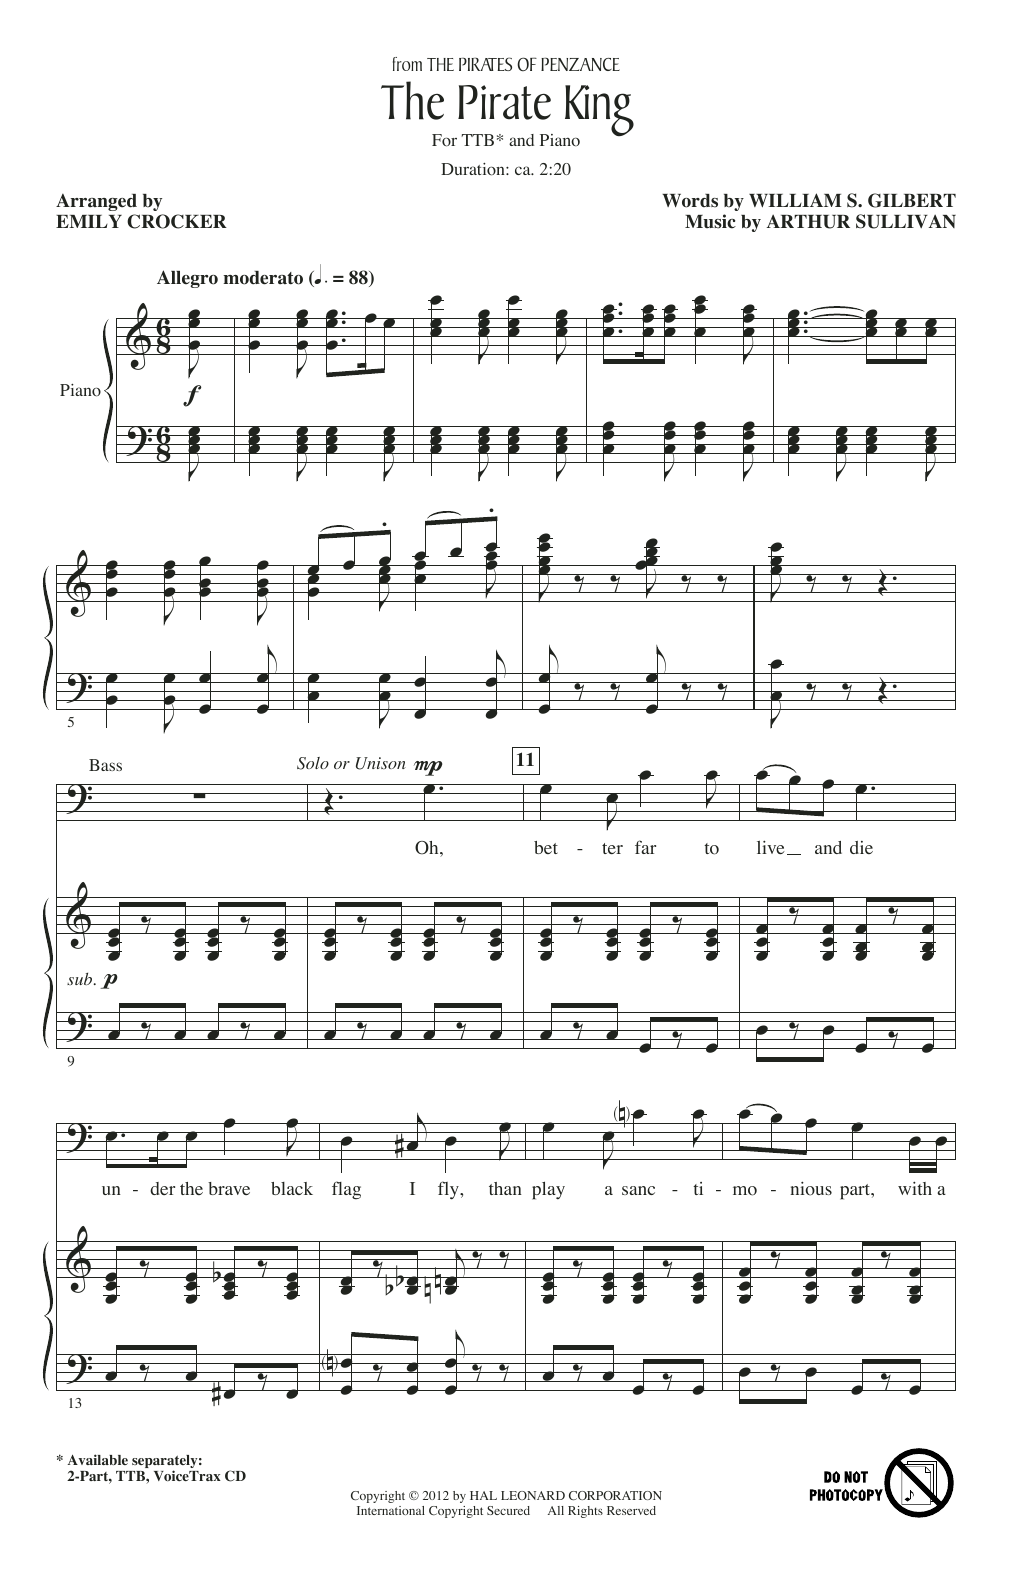 Gilbert & Sullivan The Pirate King (arr. Emily Crocker) Sheet Music Notes & Chords for 2-Part Choir - Download or Print PDF